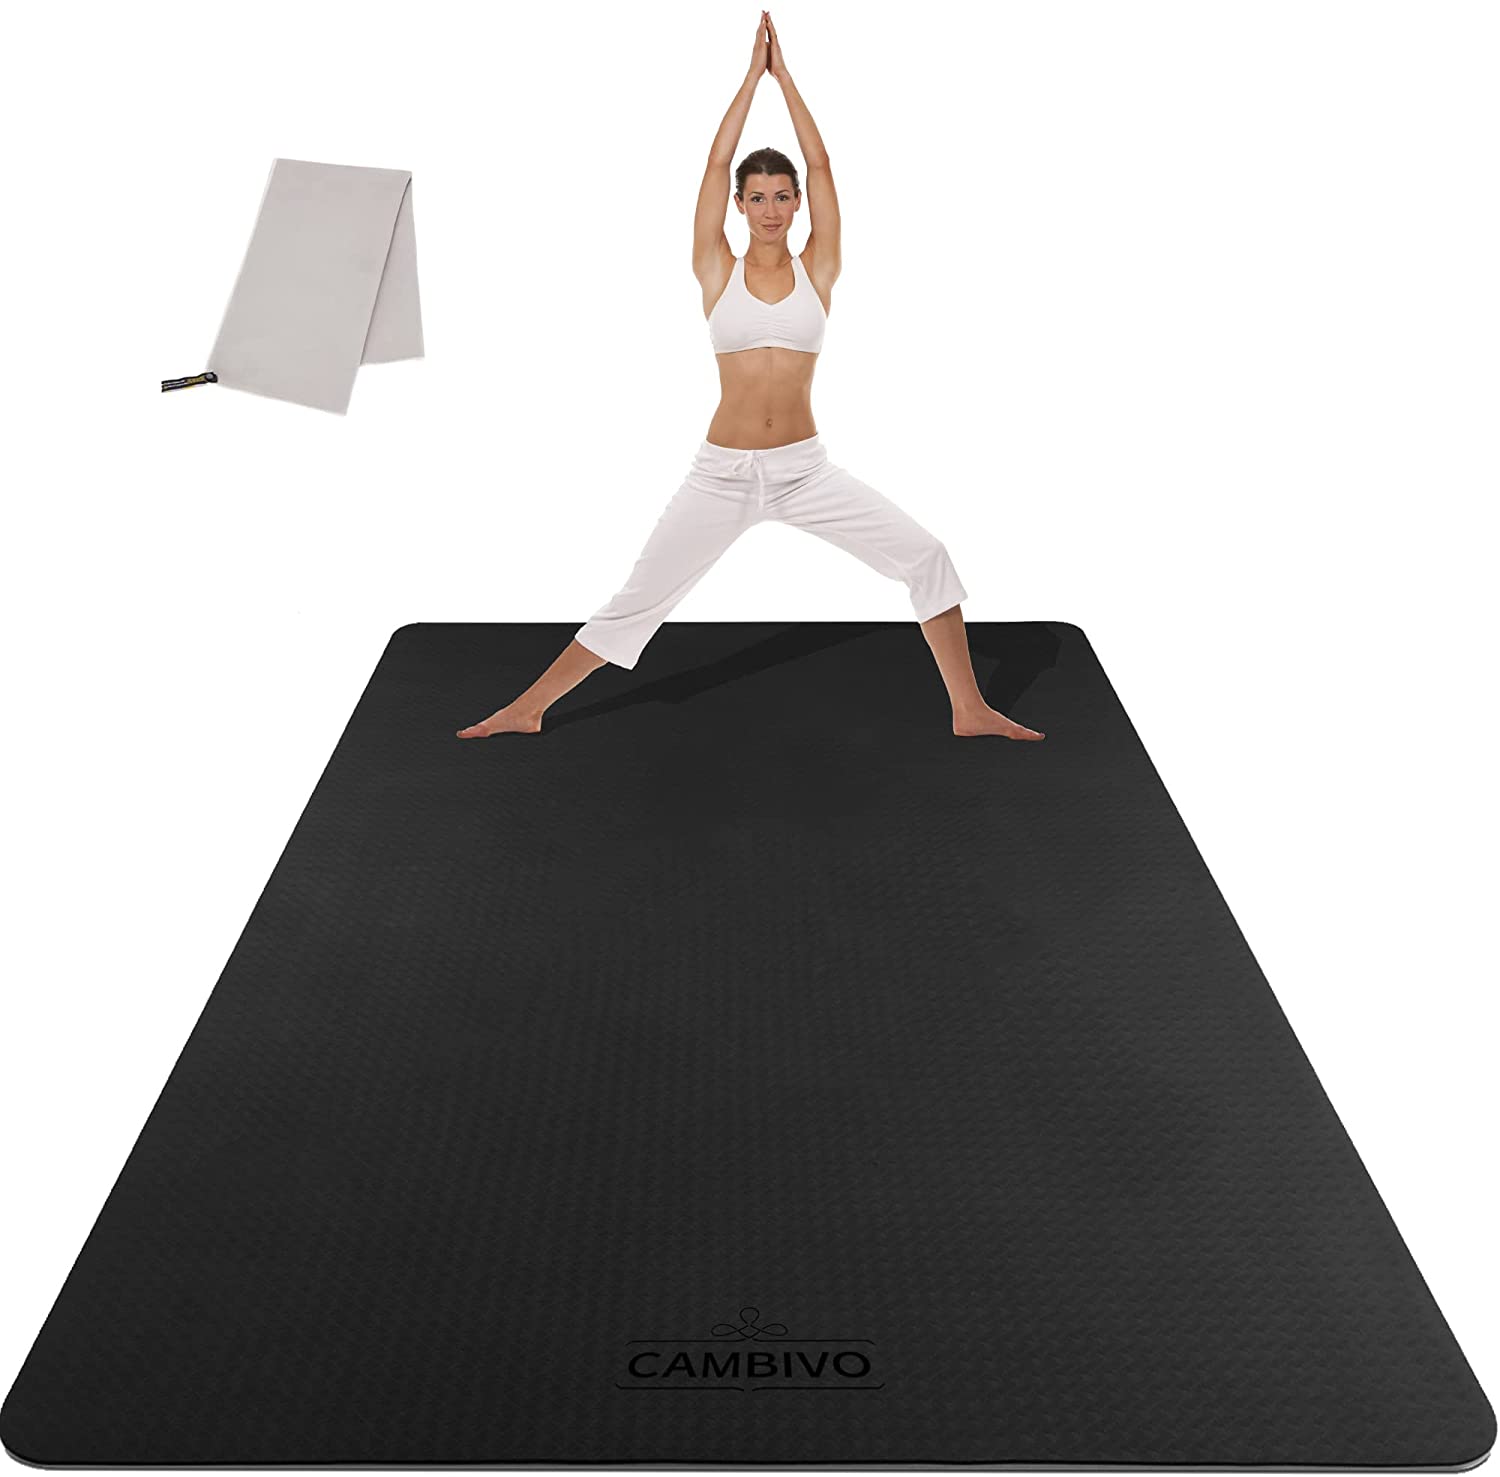 https://www.yogamatstore.com.au/wp-content/uploads/cambivo-extra-large-yoga-mat-black.jpg